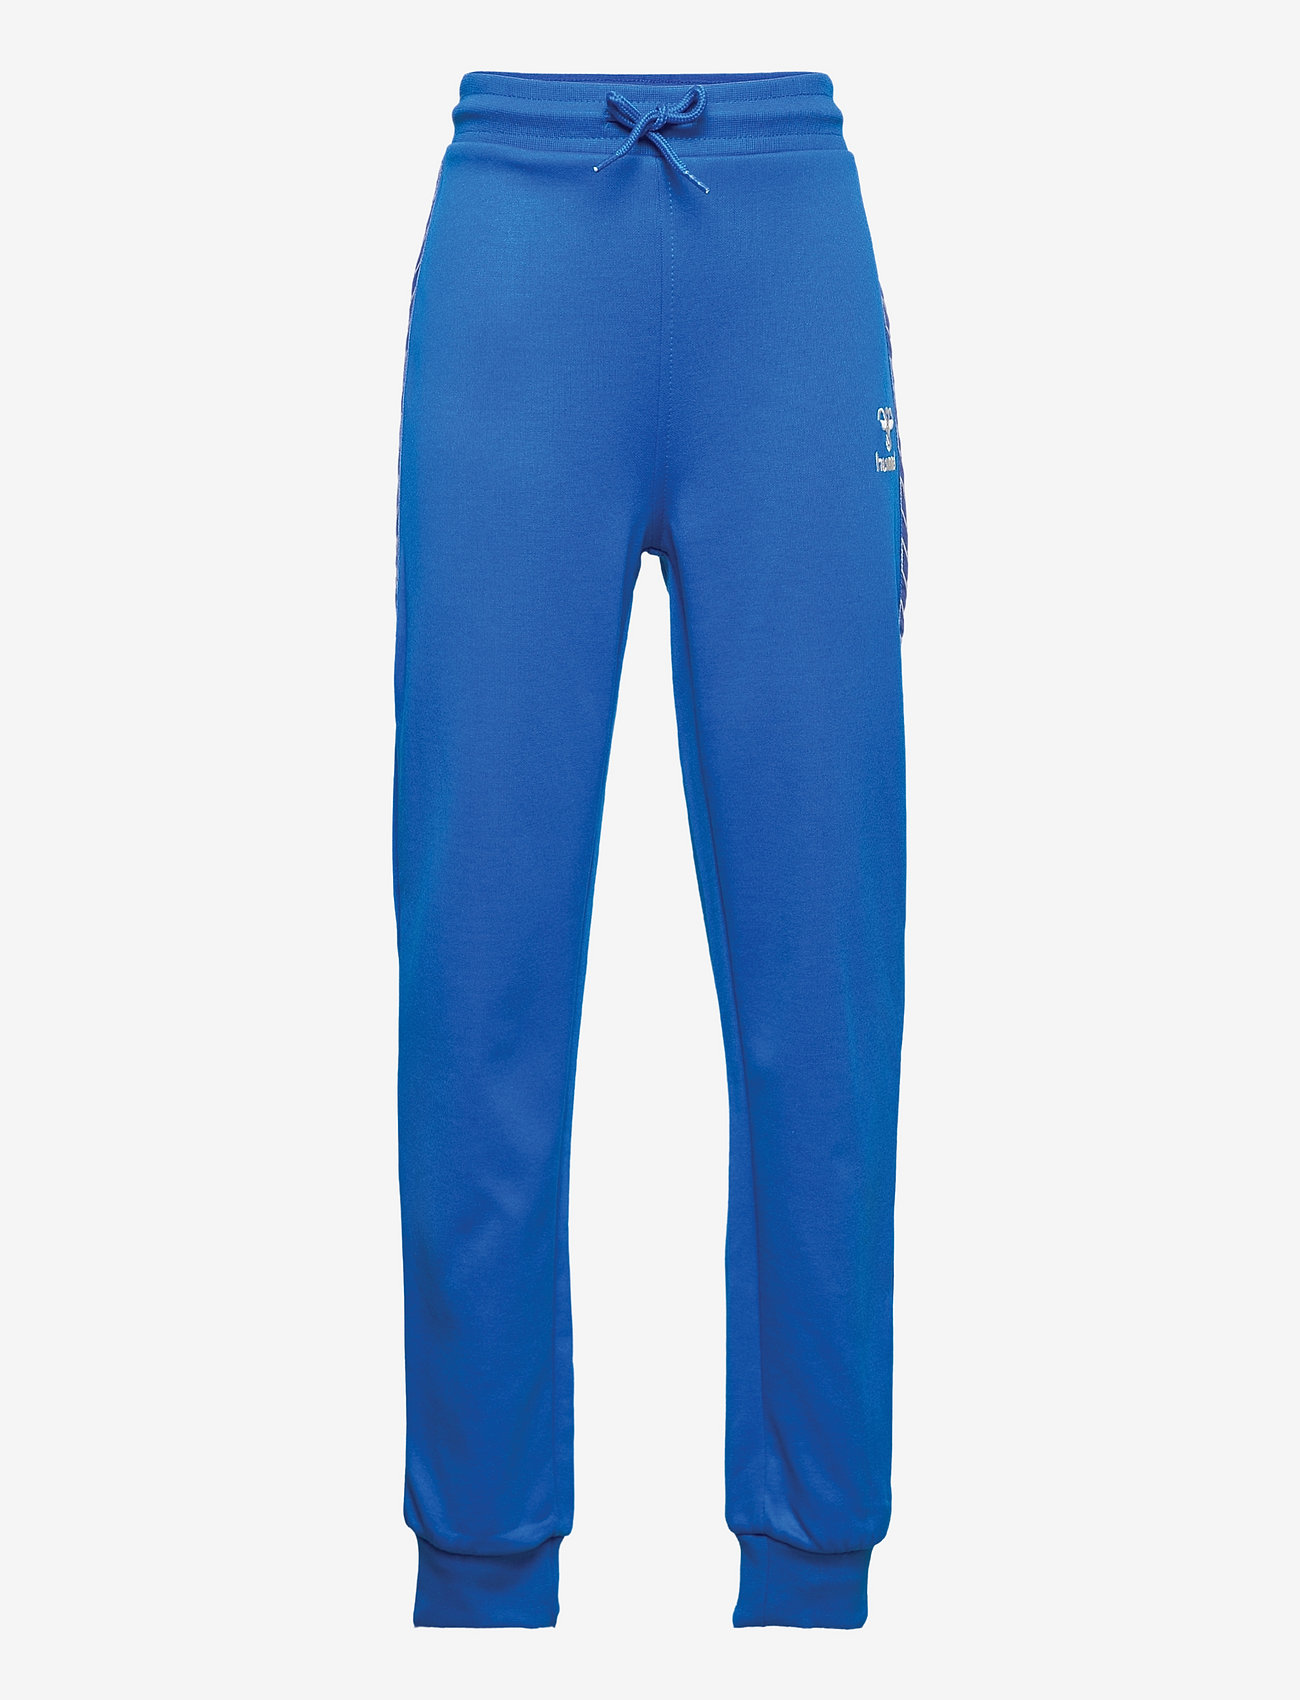 Hummel - hmlTRICK PANTS - sports bottoms - lapis blue - 0